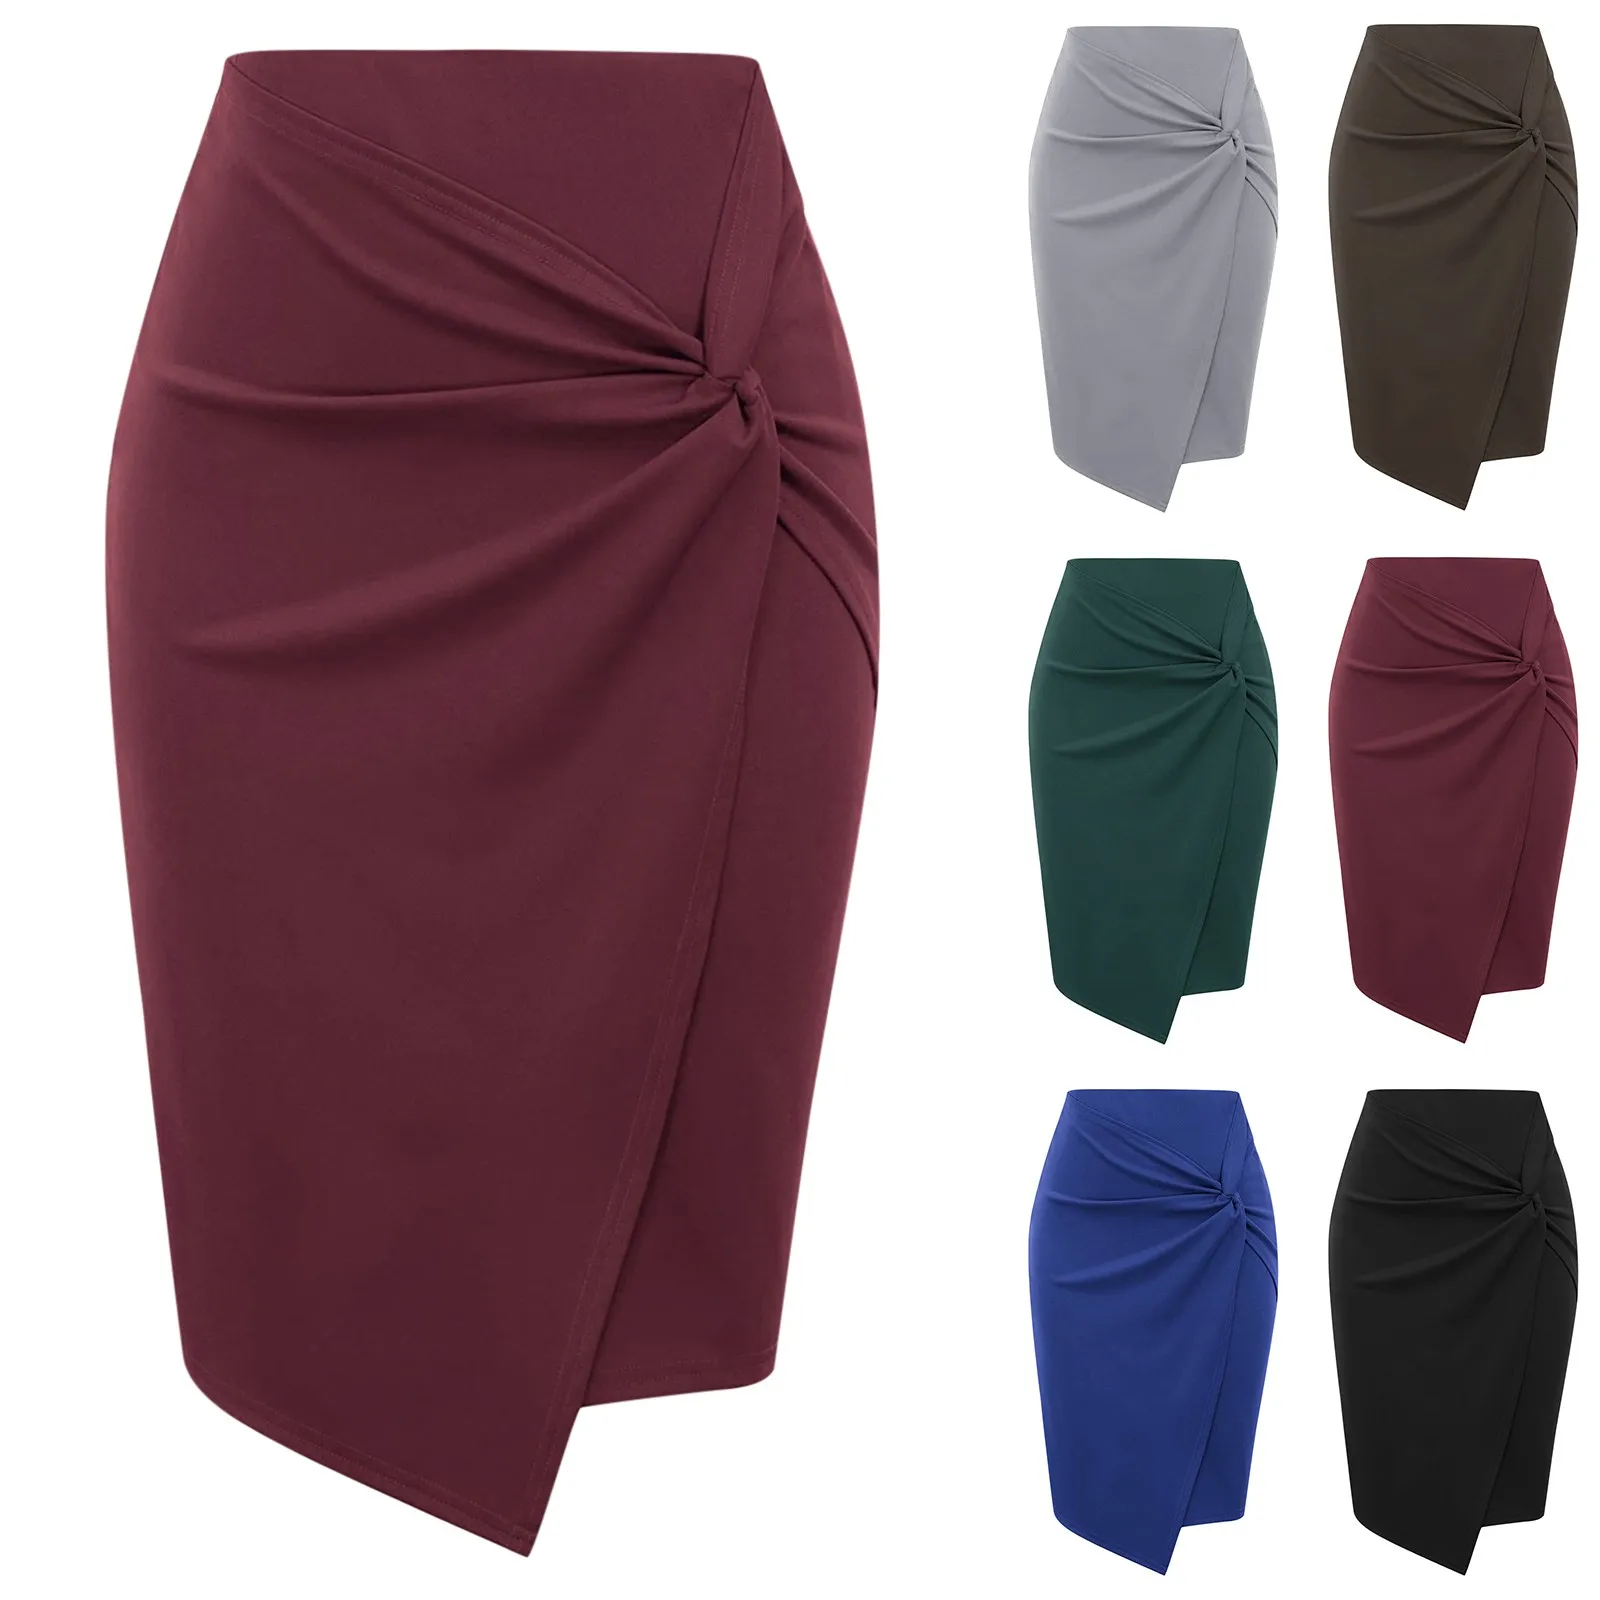 New Skirts Sexy Women Solid  High Waist Female Fashion Bodycon Irregular Office Lady Party Clubwear   Мини Юбки